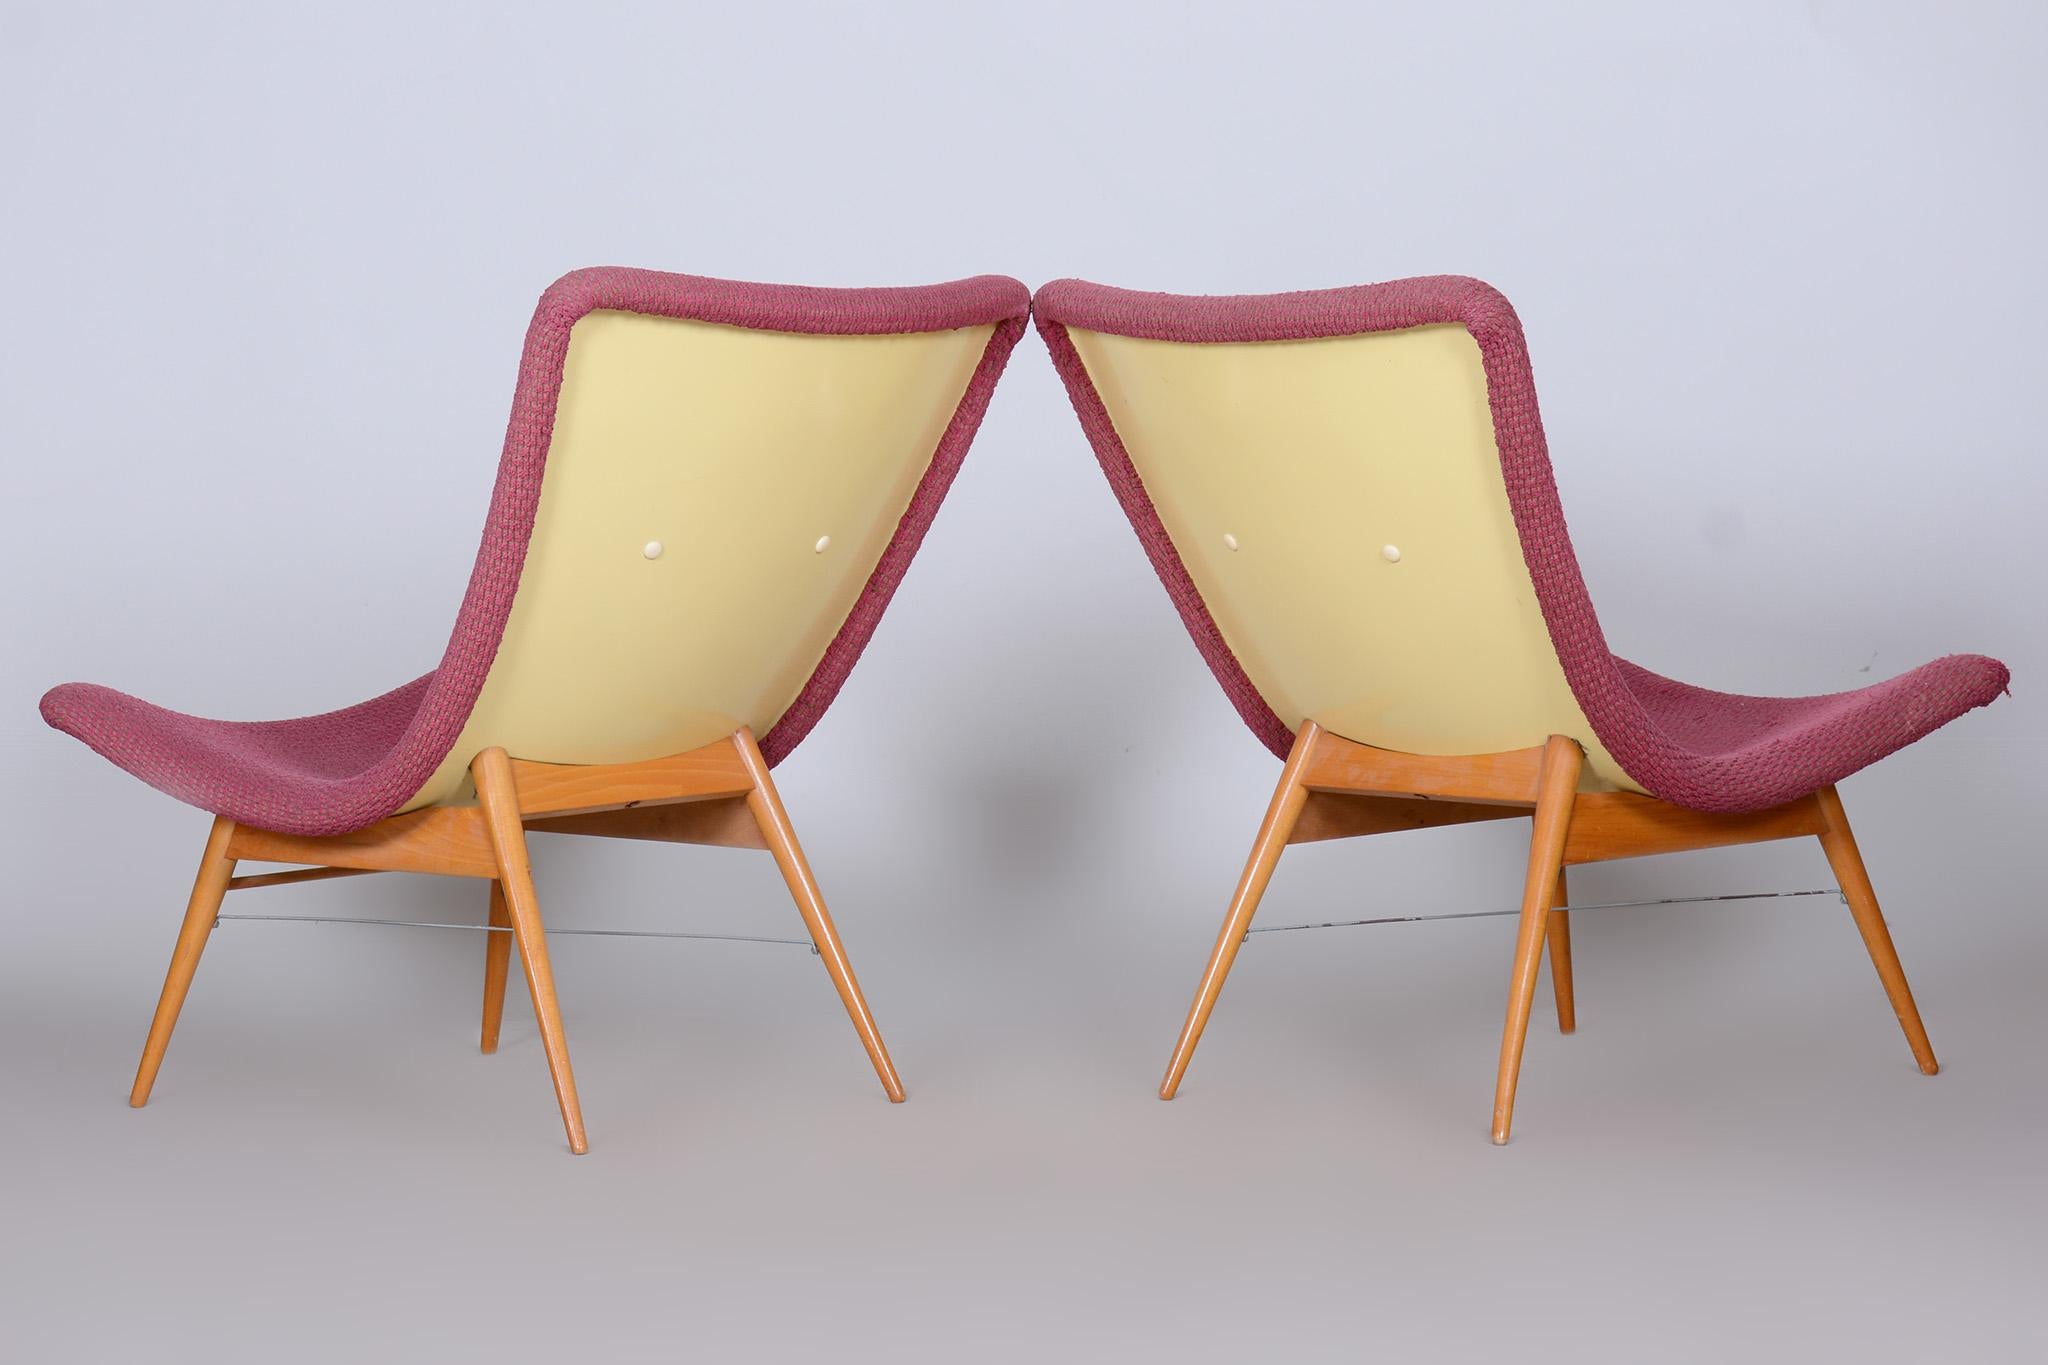 Fabric Original Pair of Mid-Century Armchairs by Miroslav Navratil, Czechia, 1950s For Sale